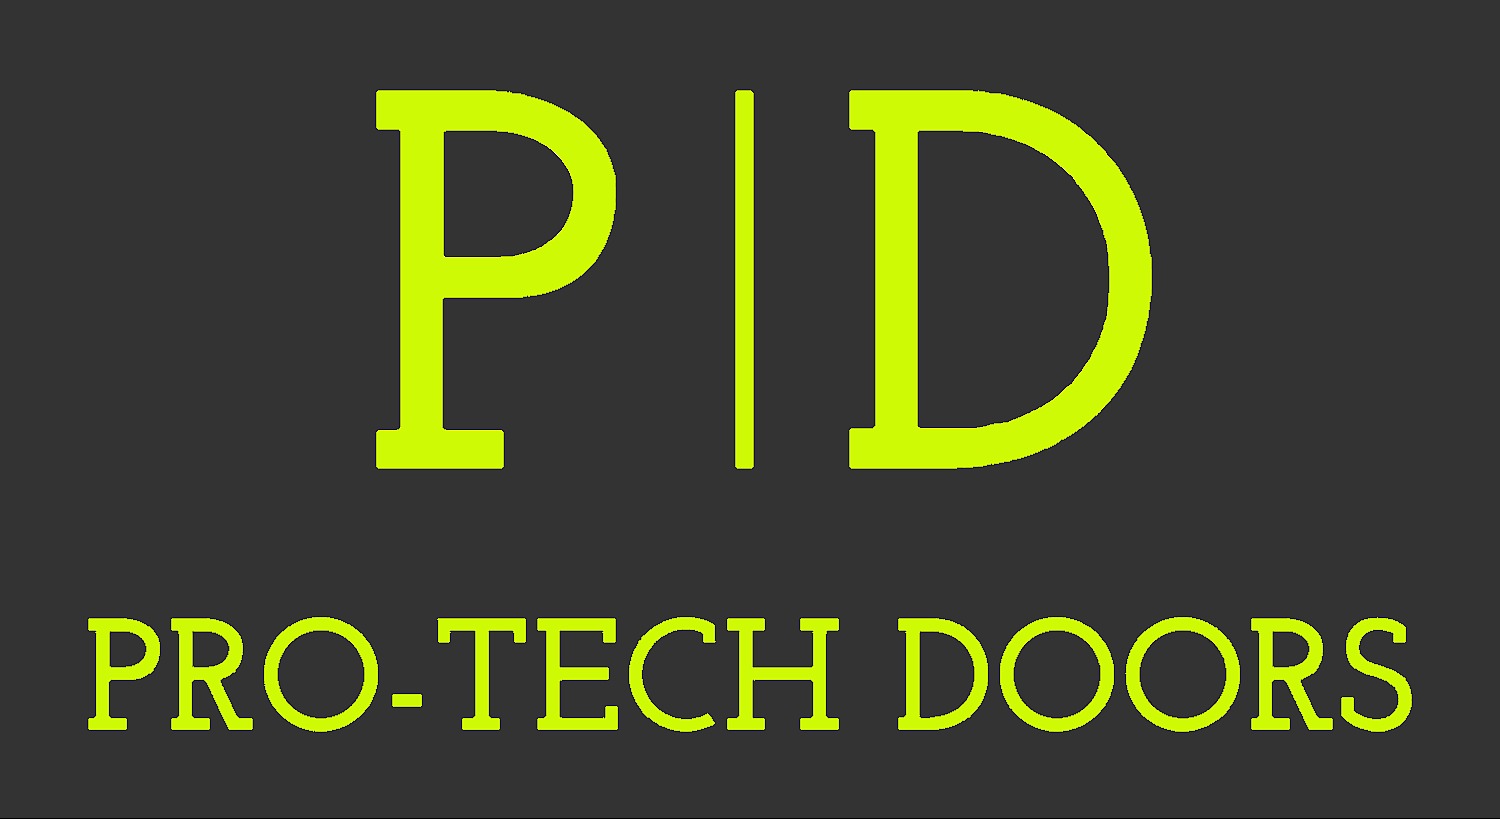 Pro-Tech Doors logo